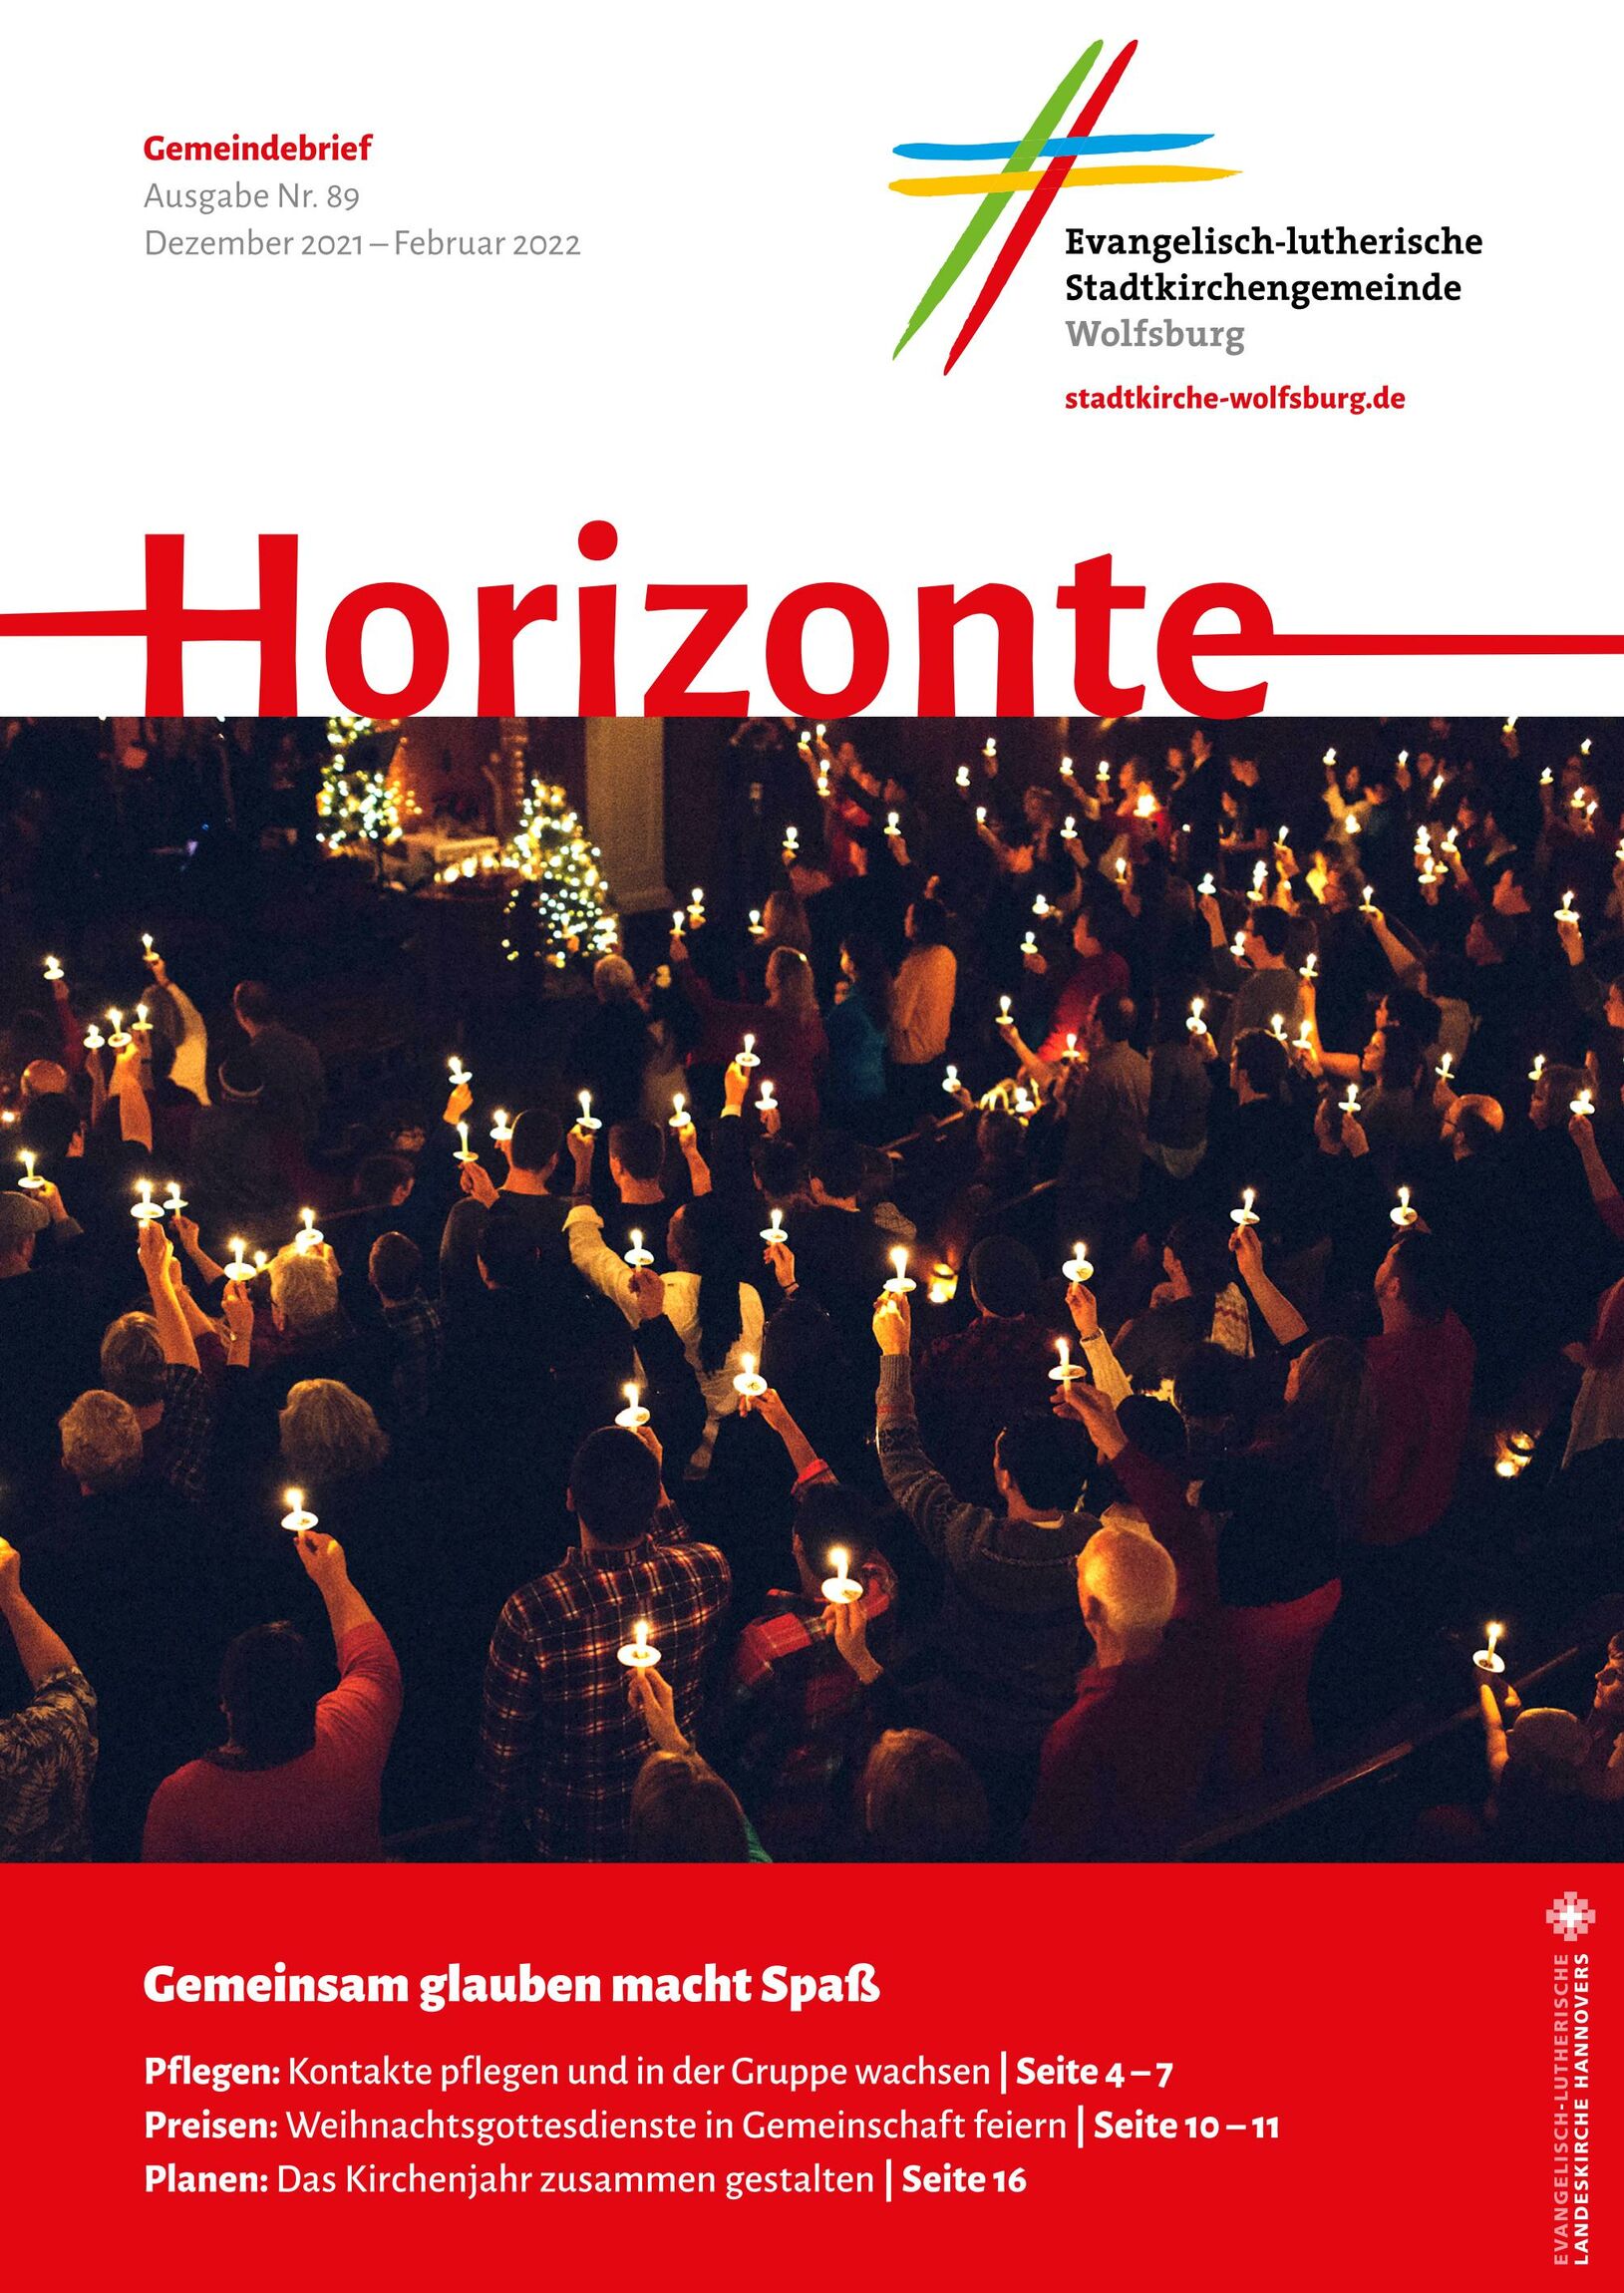 Titel Horizonte Dez 2021 - Feb 2022